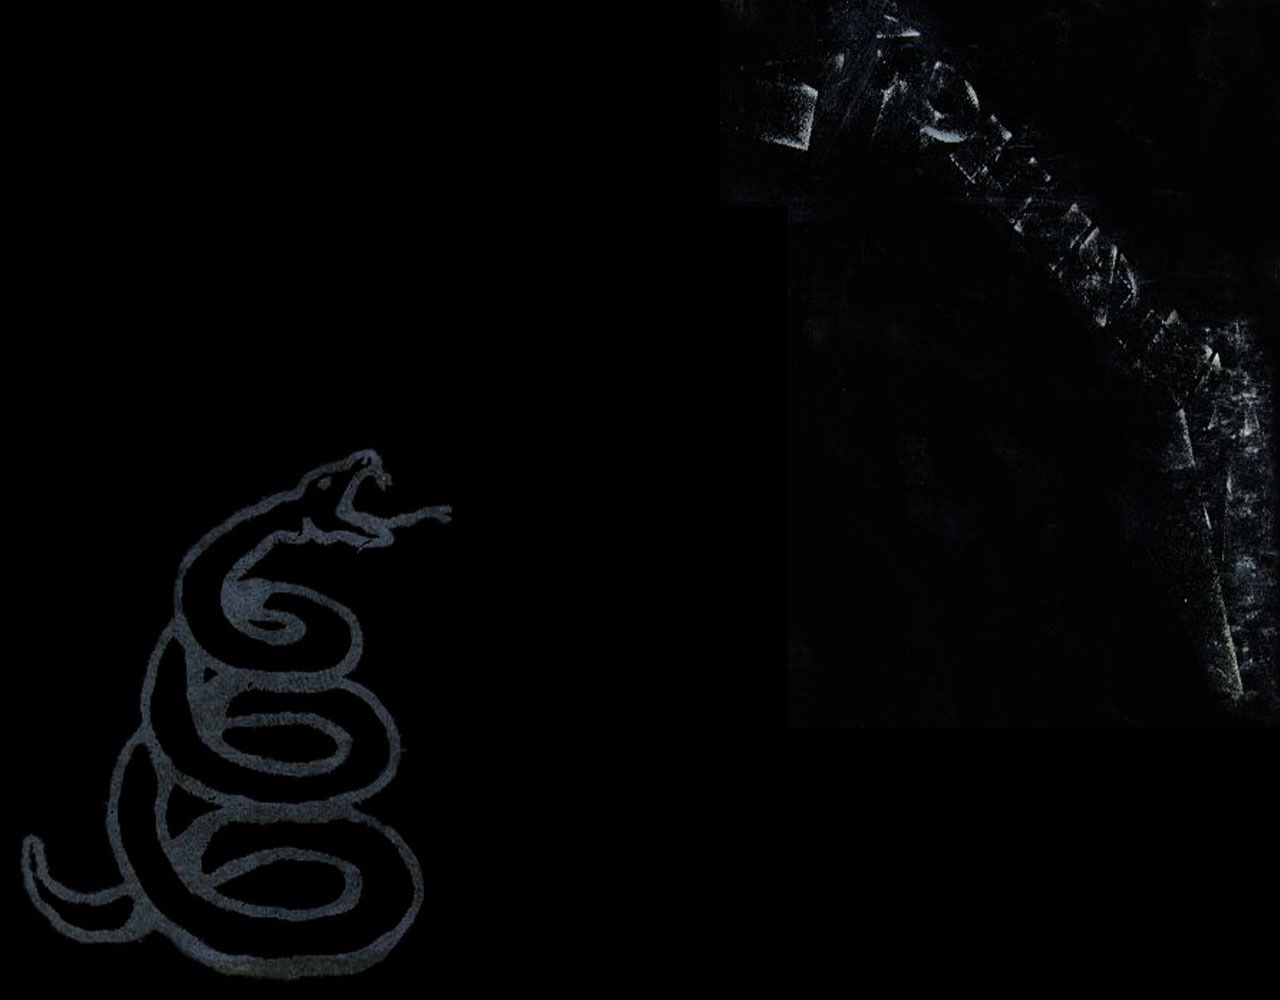 Metallica Black Album Wallpaper Flipped Image And